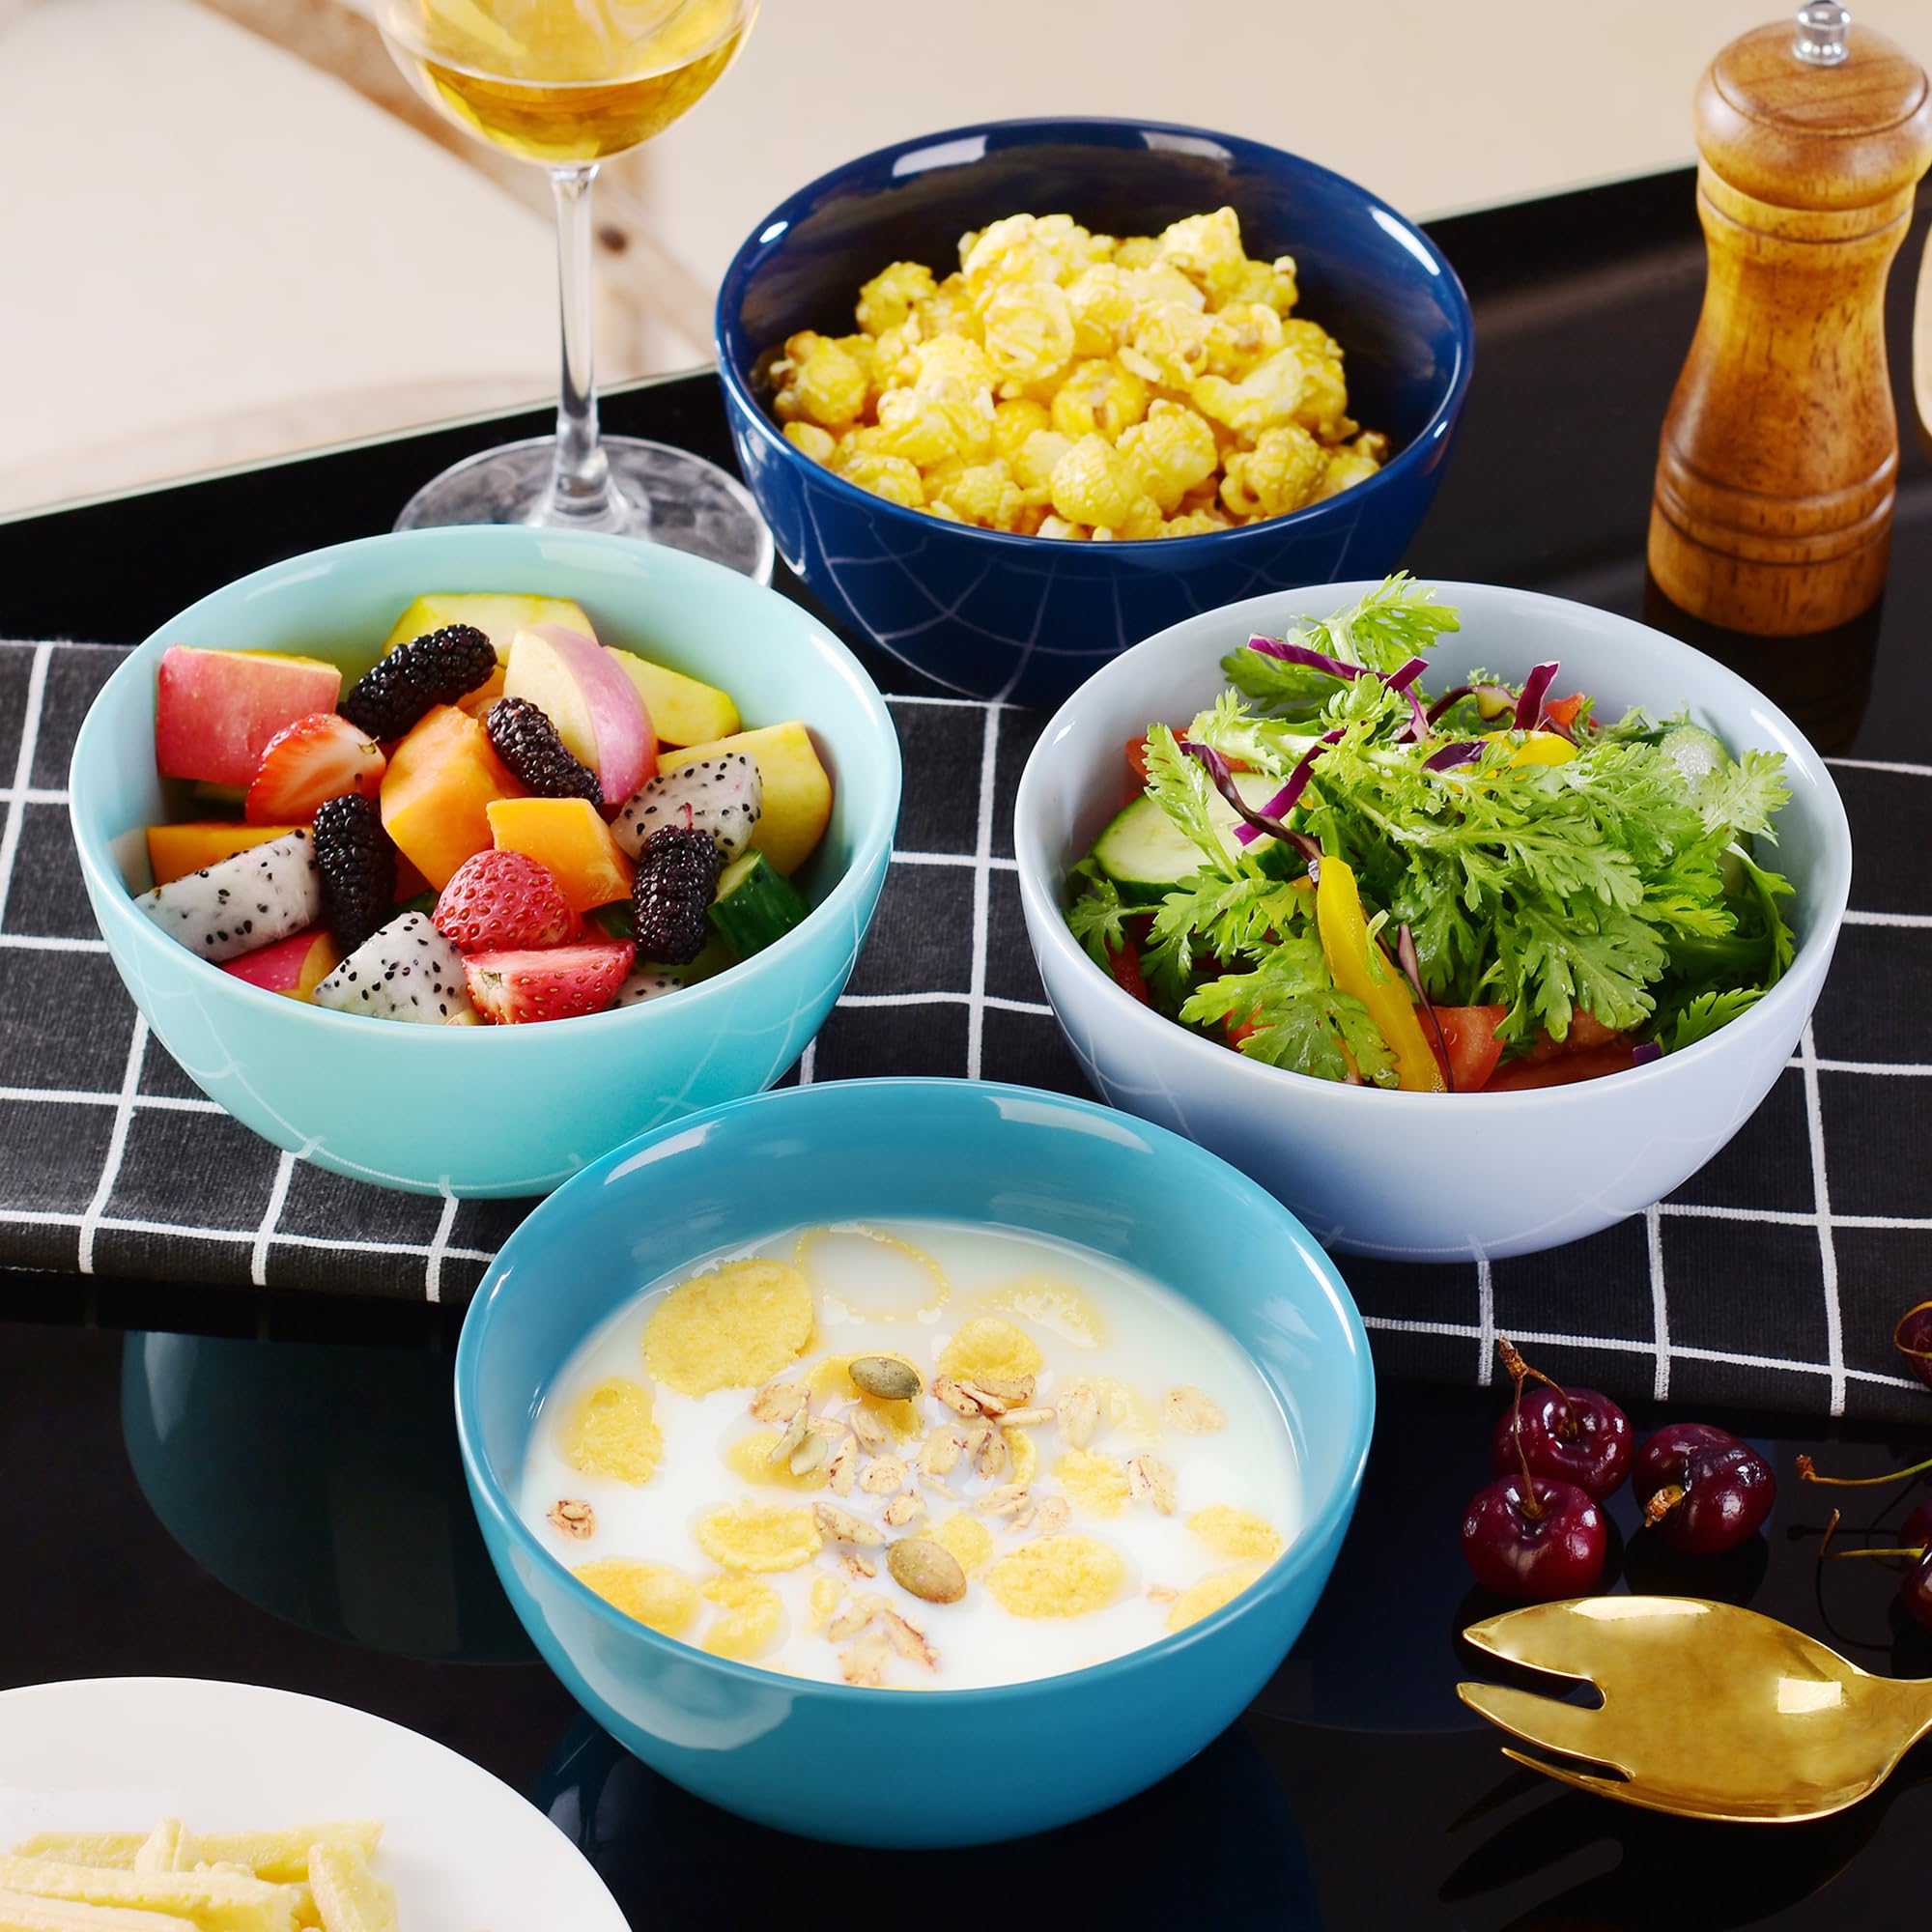 LOVECASA Porcelain Dessert Bowls Cereal bowl, 25 Oz Colorful Soup Bowls, Simple Ceramic Bowl for Soup, Dessert, Ice Cream, Fruits, Salad, Snack, LEAD & CADMIUM FREE, Set of 4